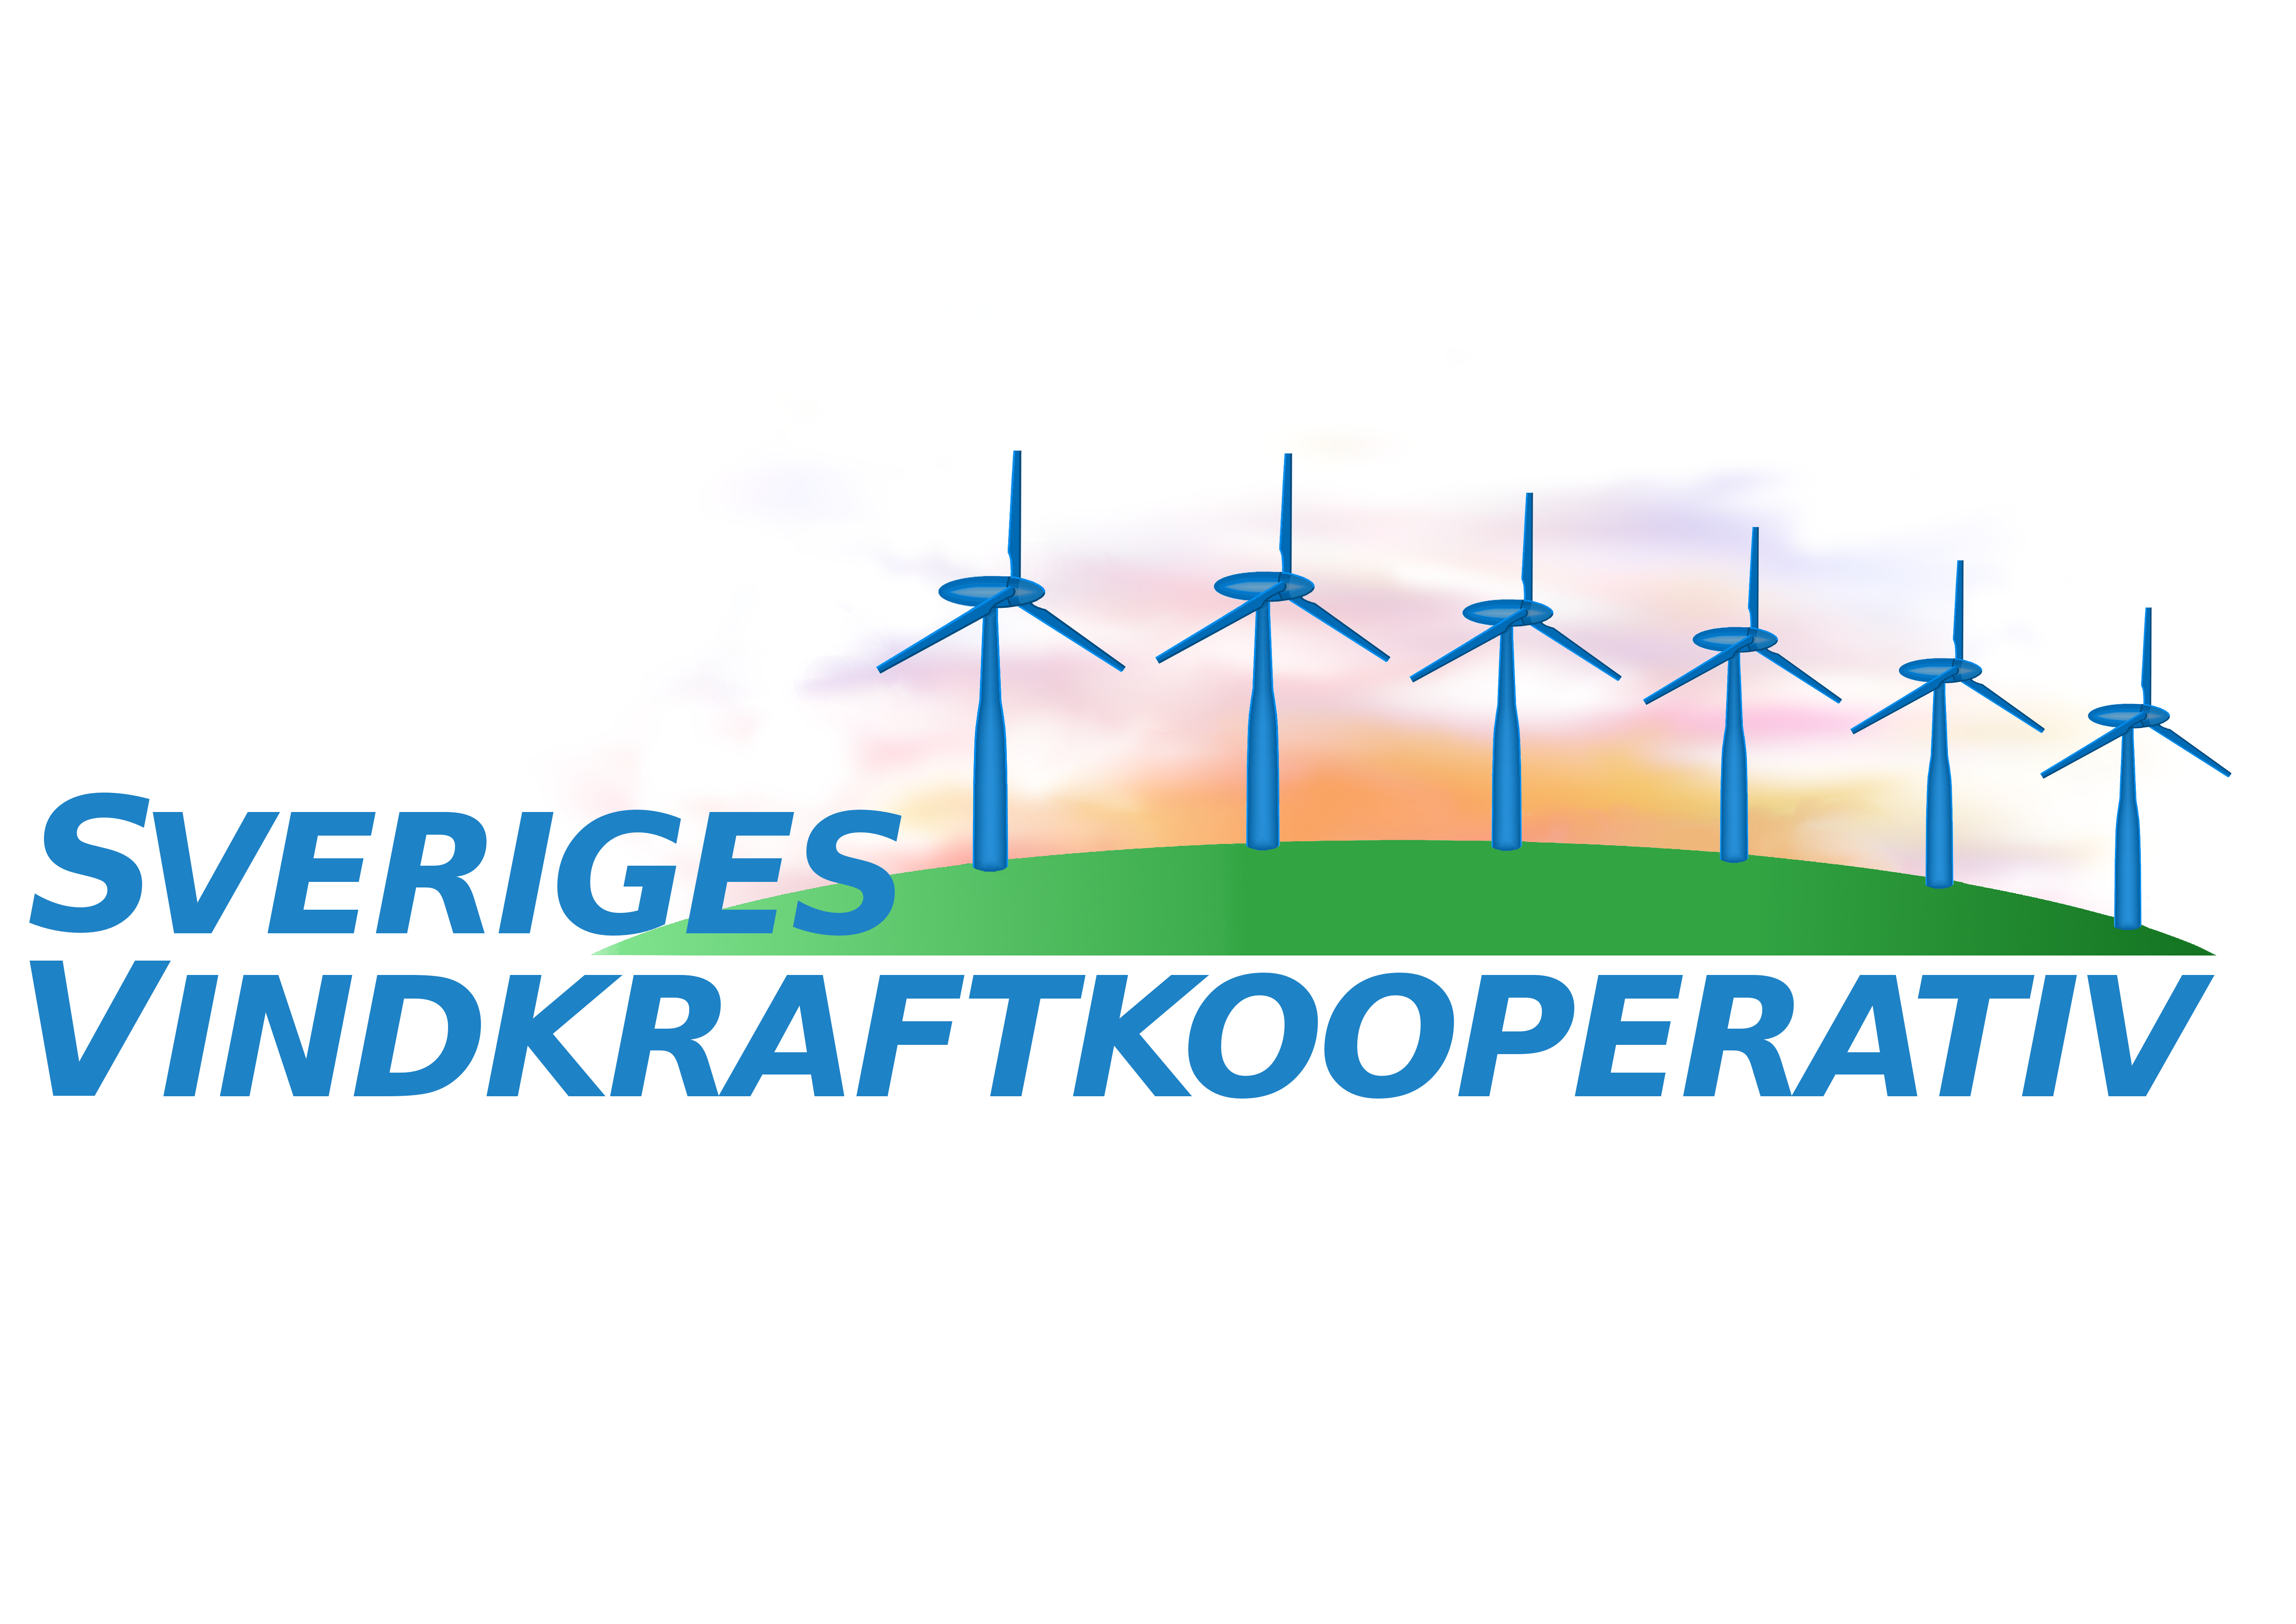 SVEF – Sveriges vindkraftkooperativ